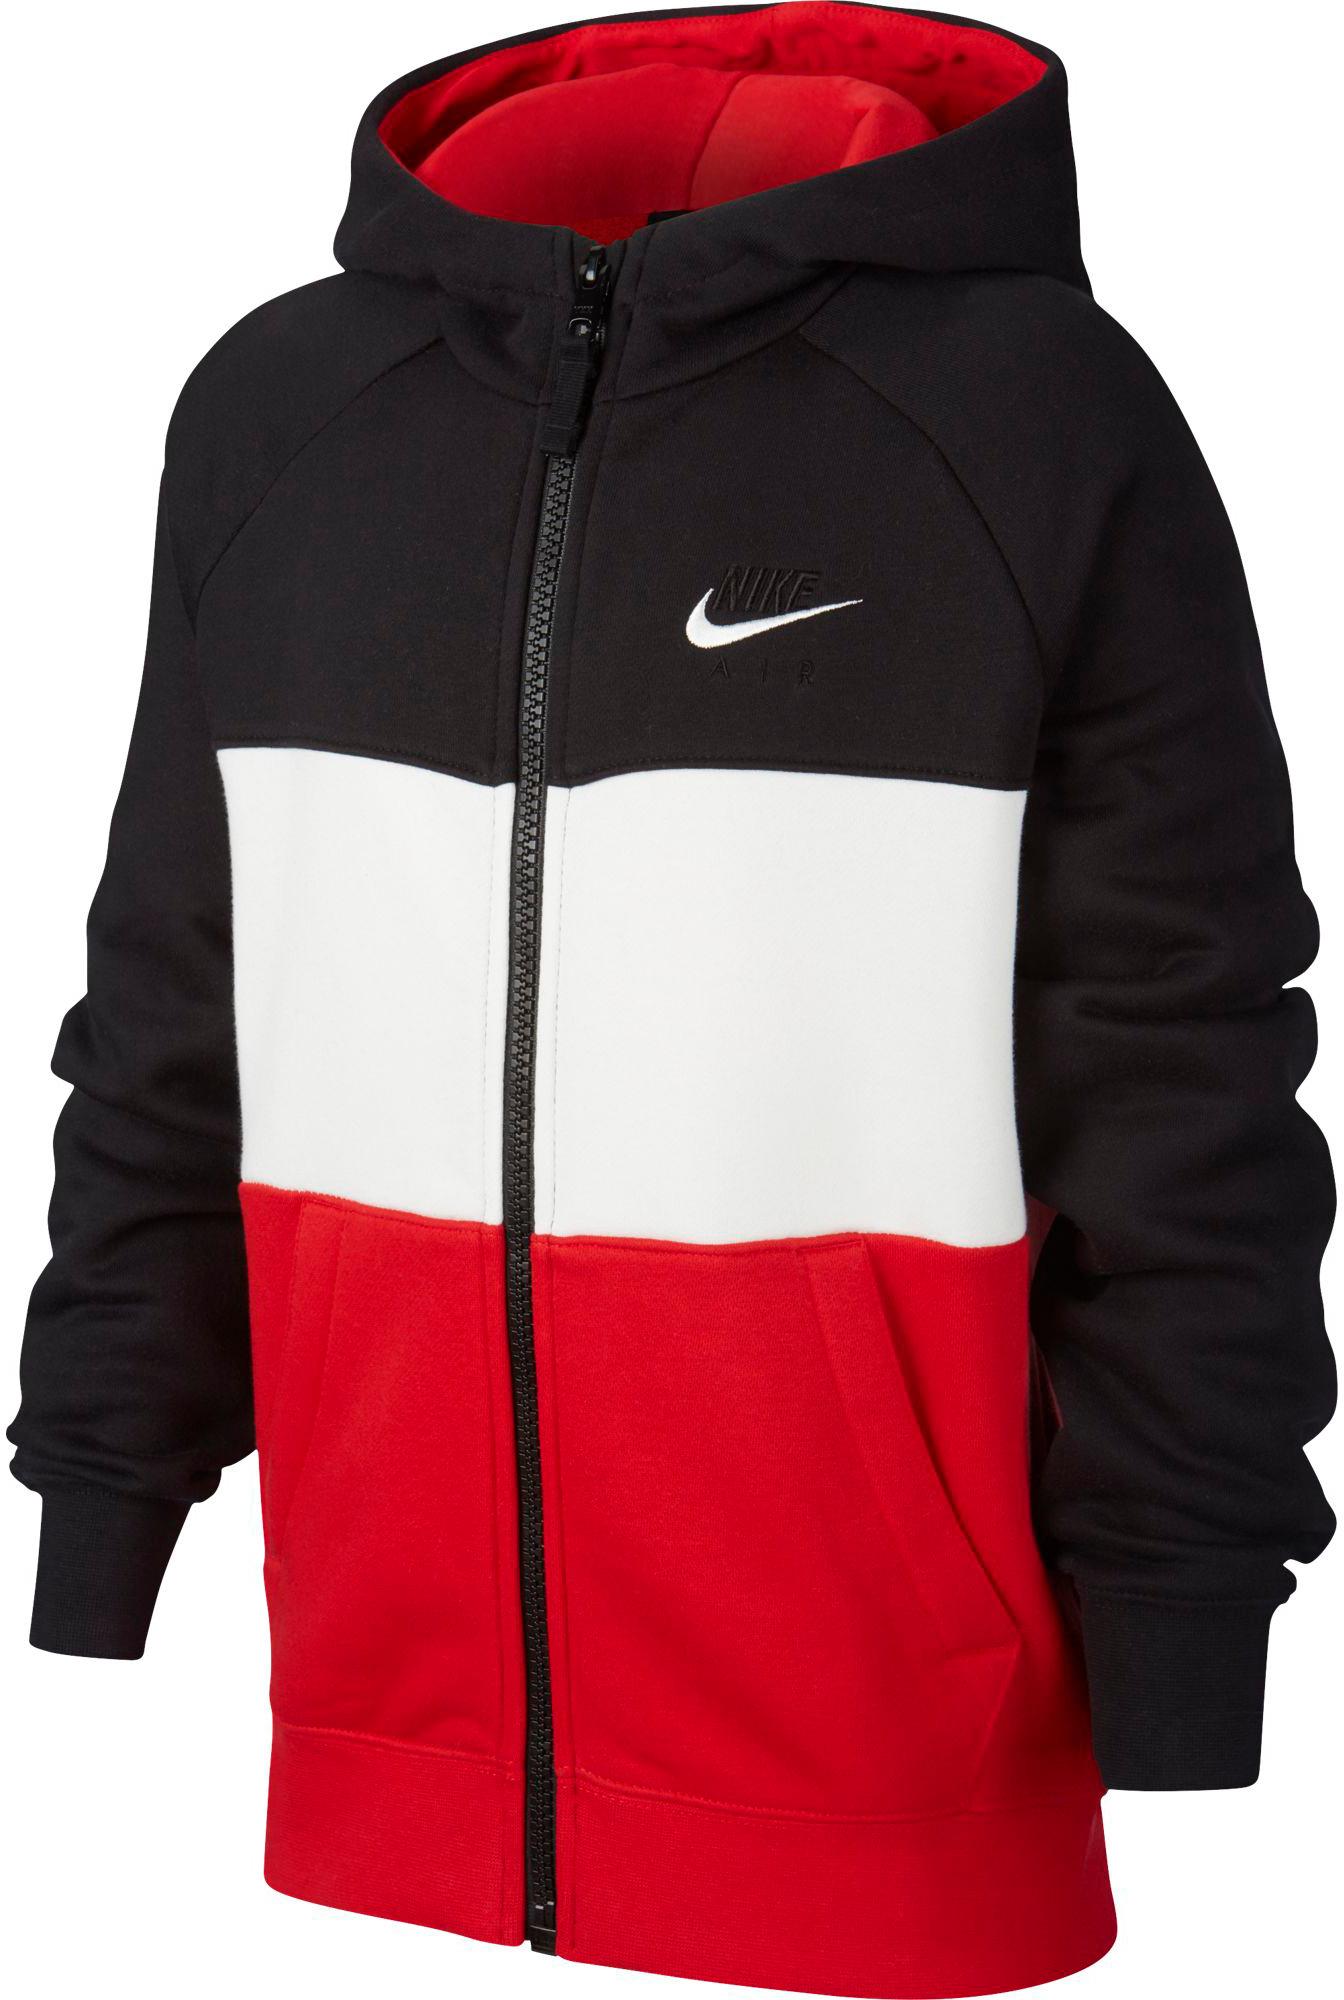 black red and white nike hoodie